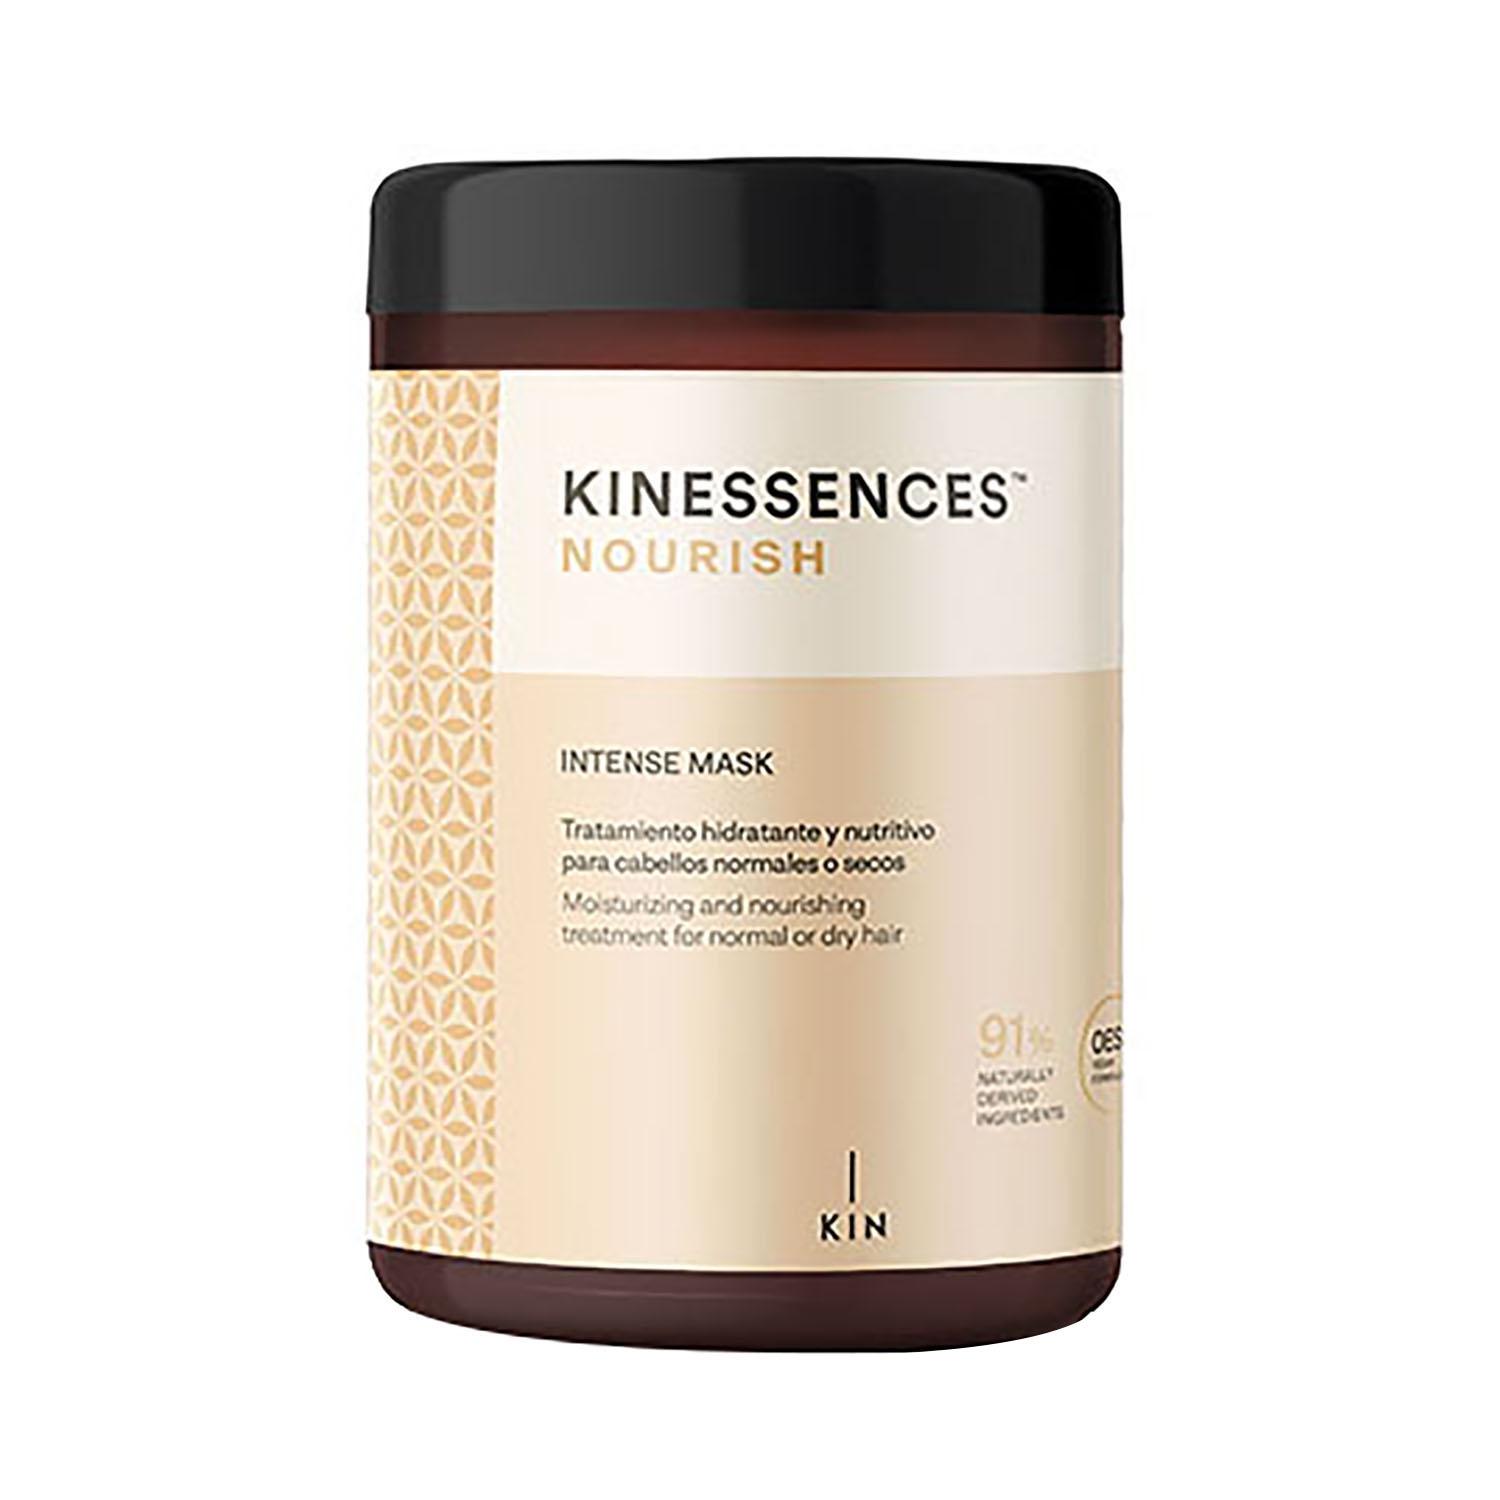 kin cosmetics kinessences nourish intense mask (900ml)